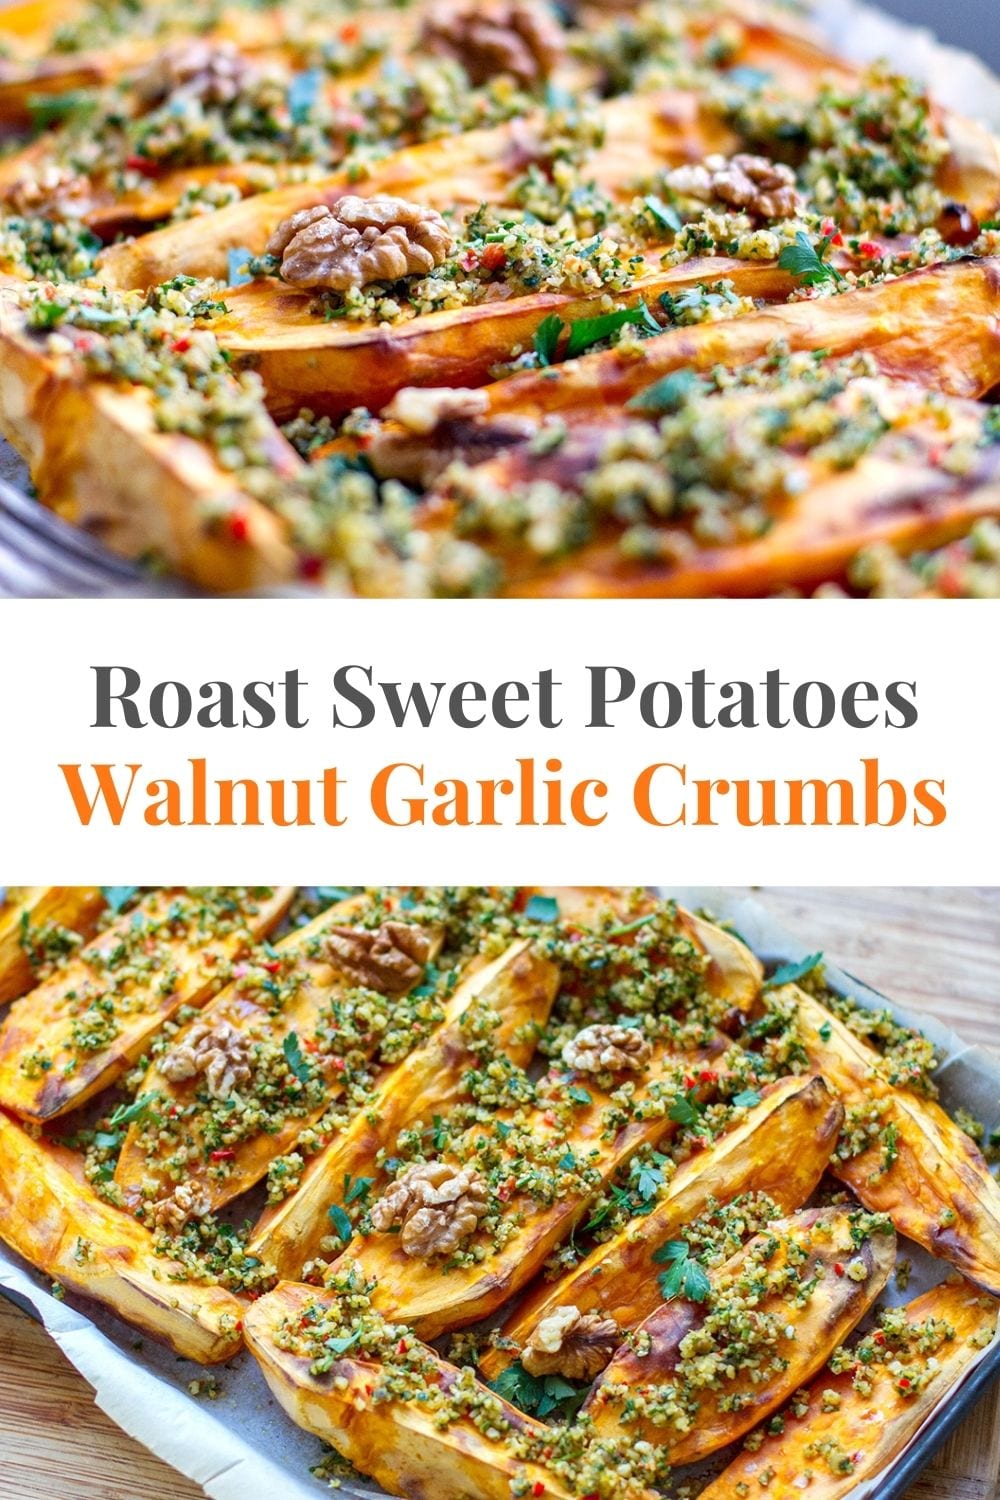 Roasted Sweet Potatoes With Walnut Parsley & Garlic